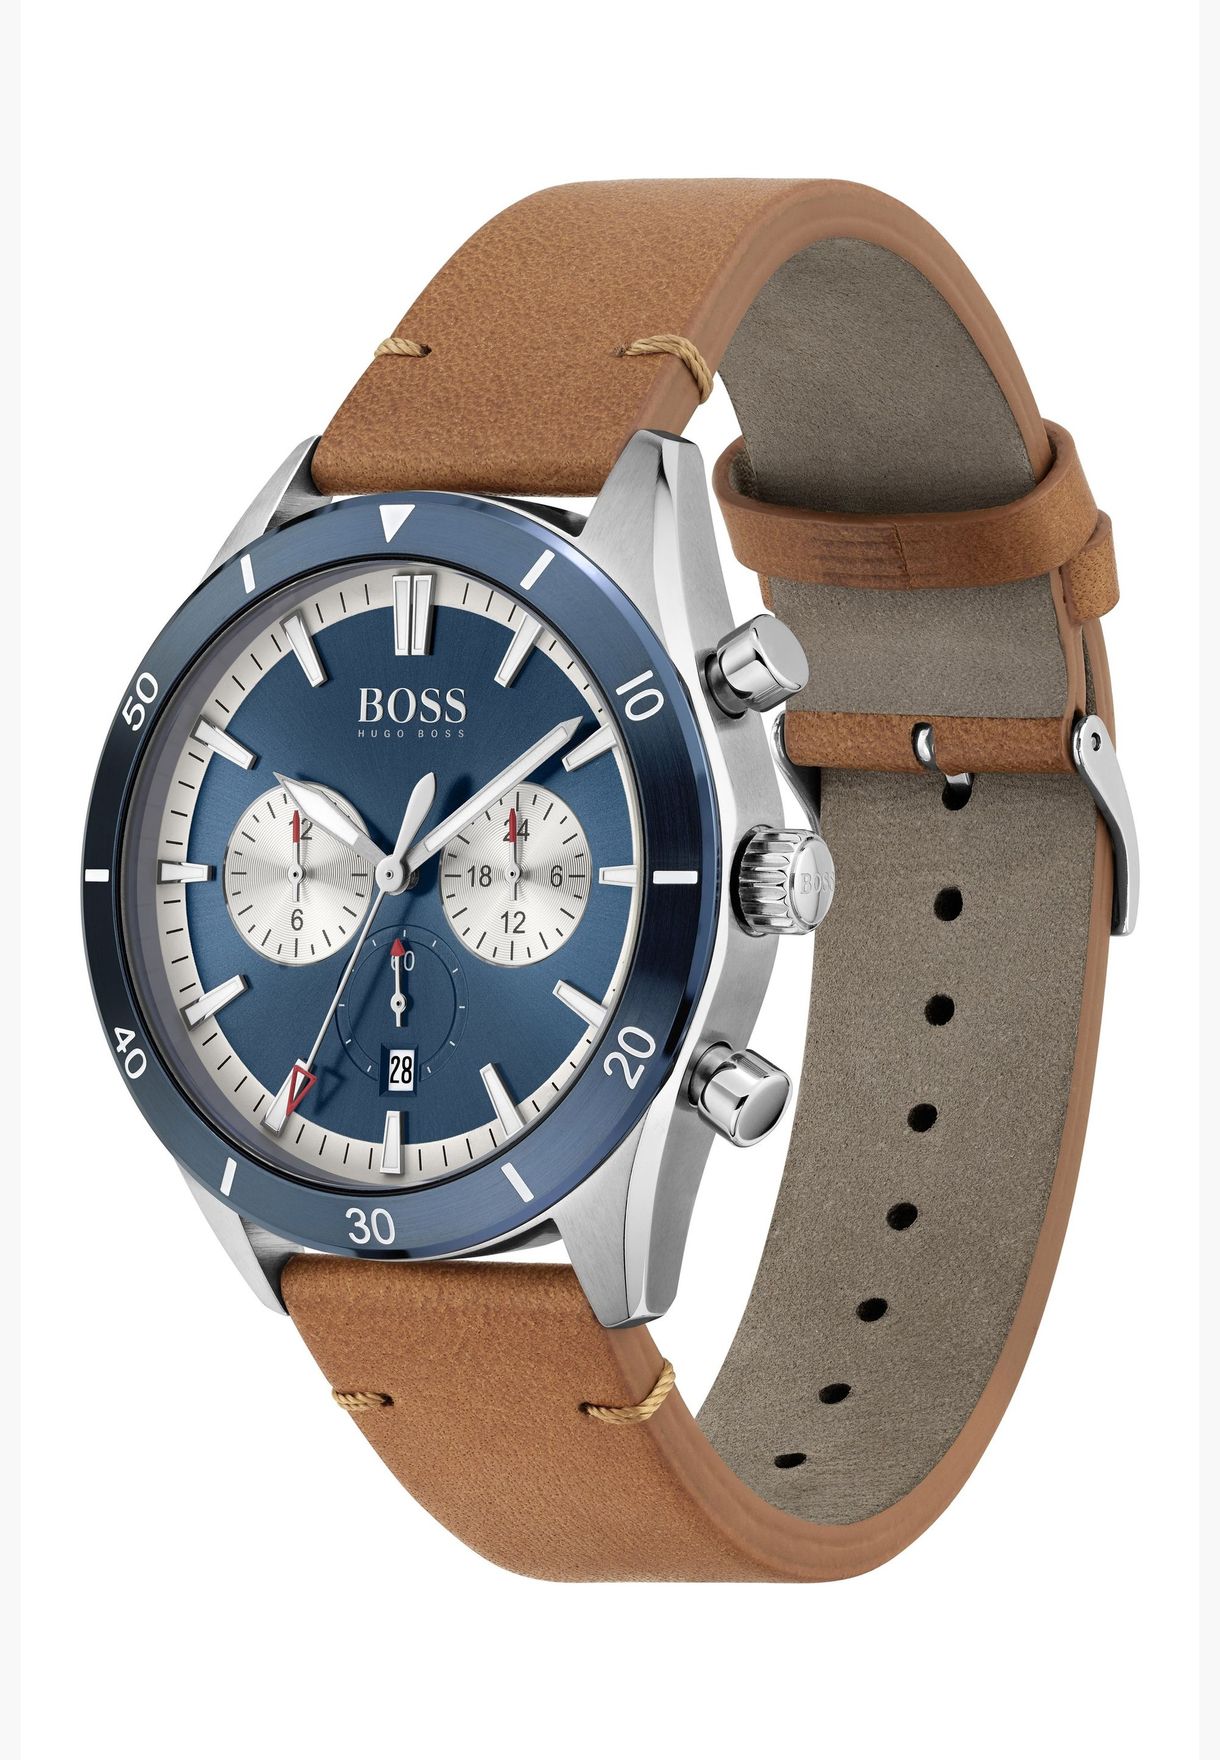 Hugo Boss SANTIAGO Leather Watch for men - 1513860